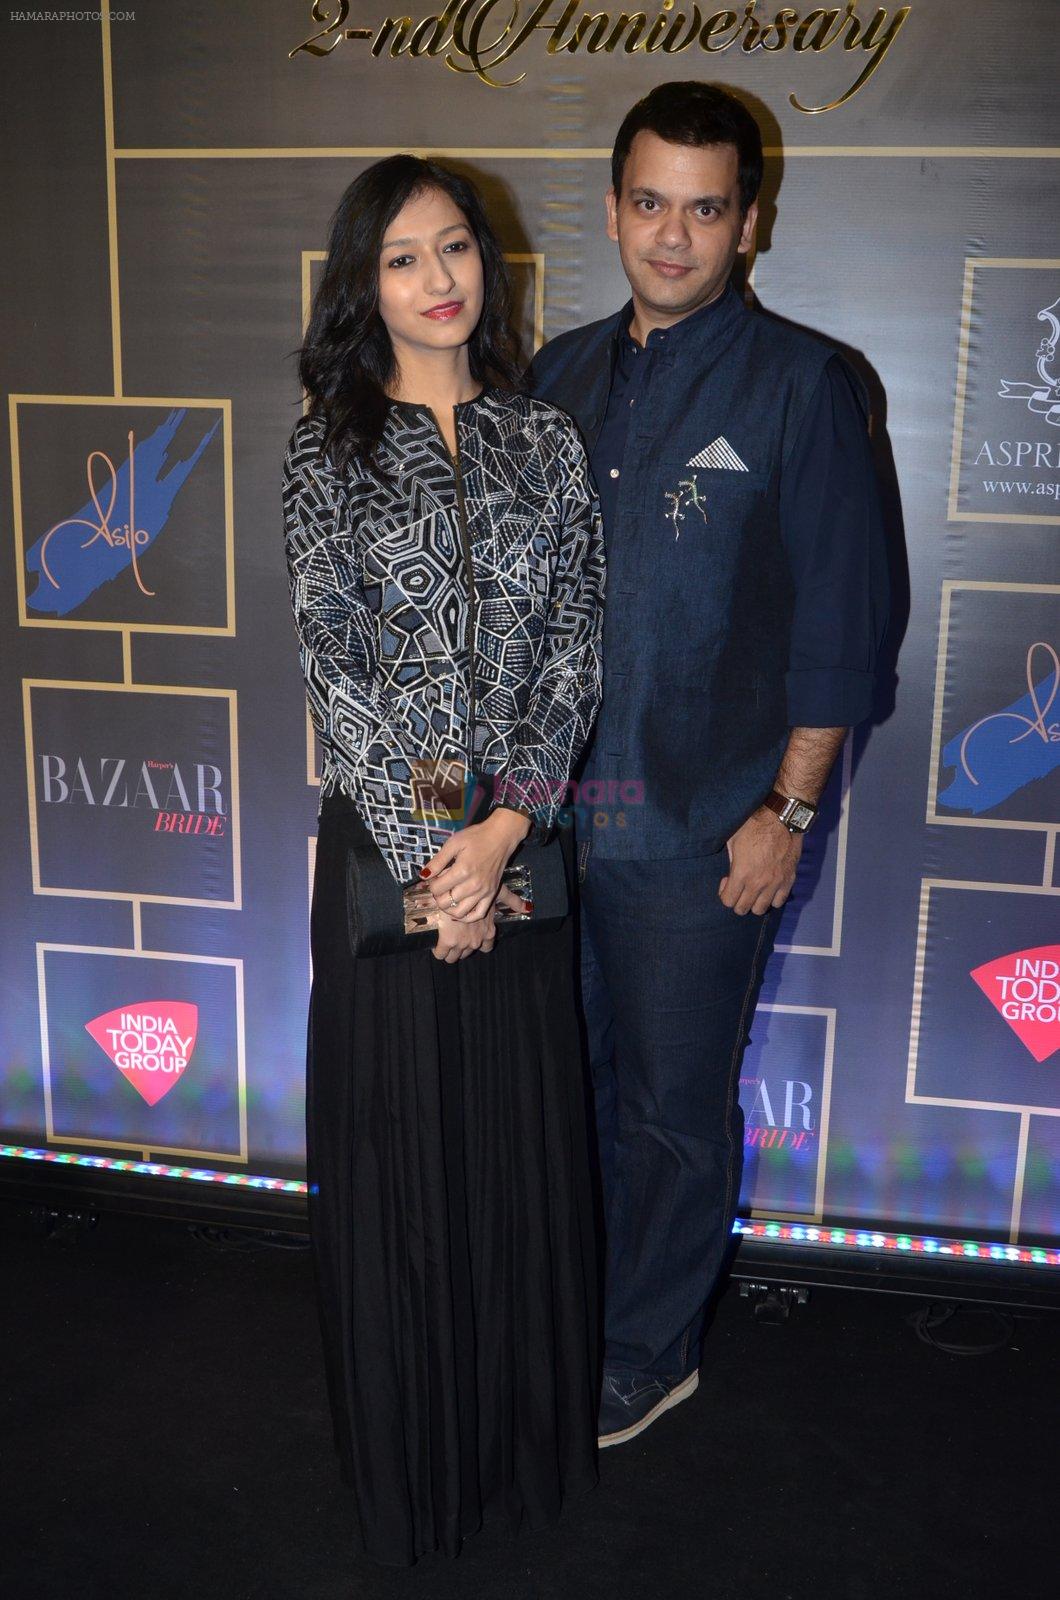 at Harper's Bazaar bride anniversary in Mumbai on 18th Feb 2016